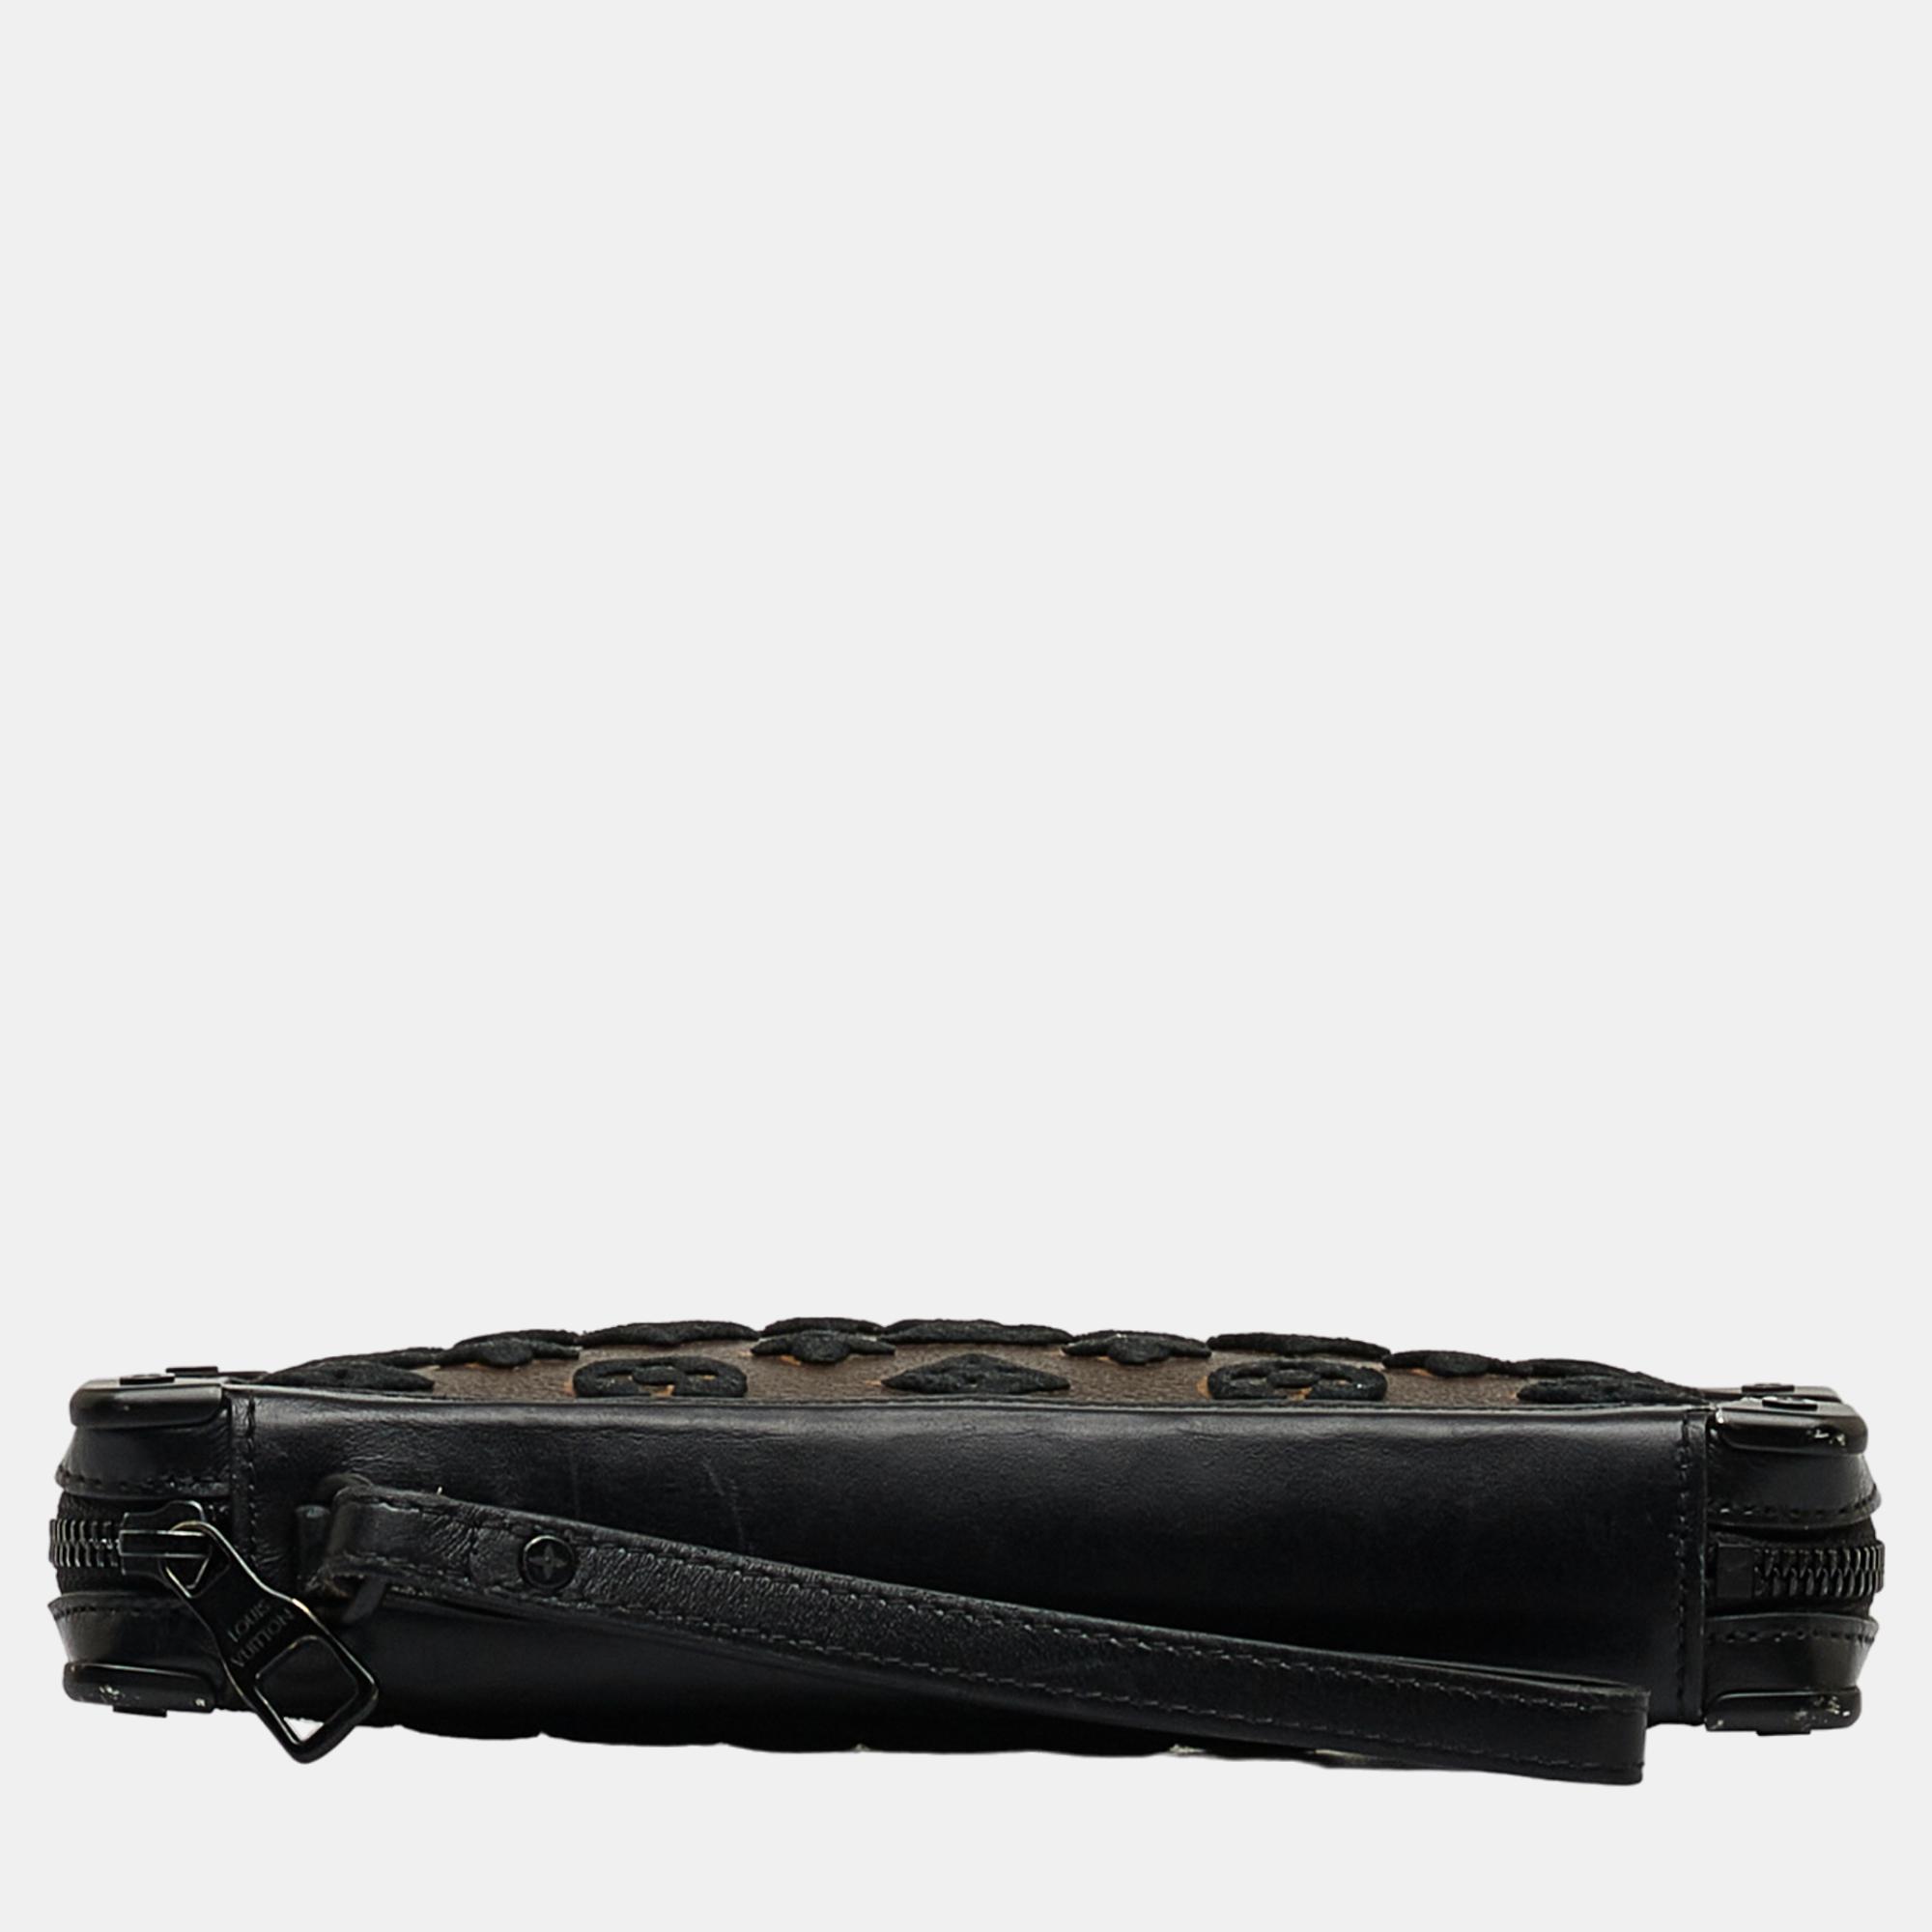 Louis Vuitton Black/Brown Monogram Tuffetage Soft Trunk Clutch